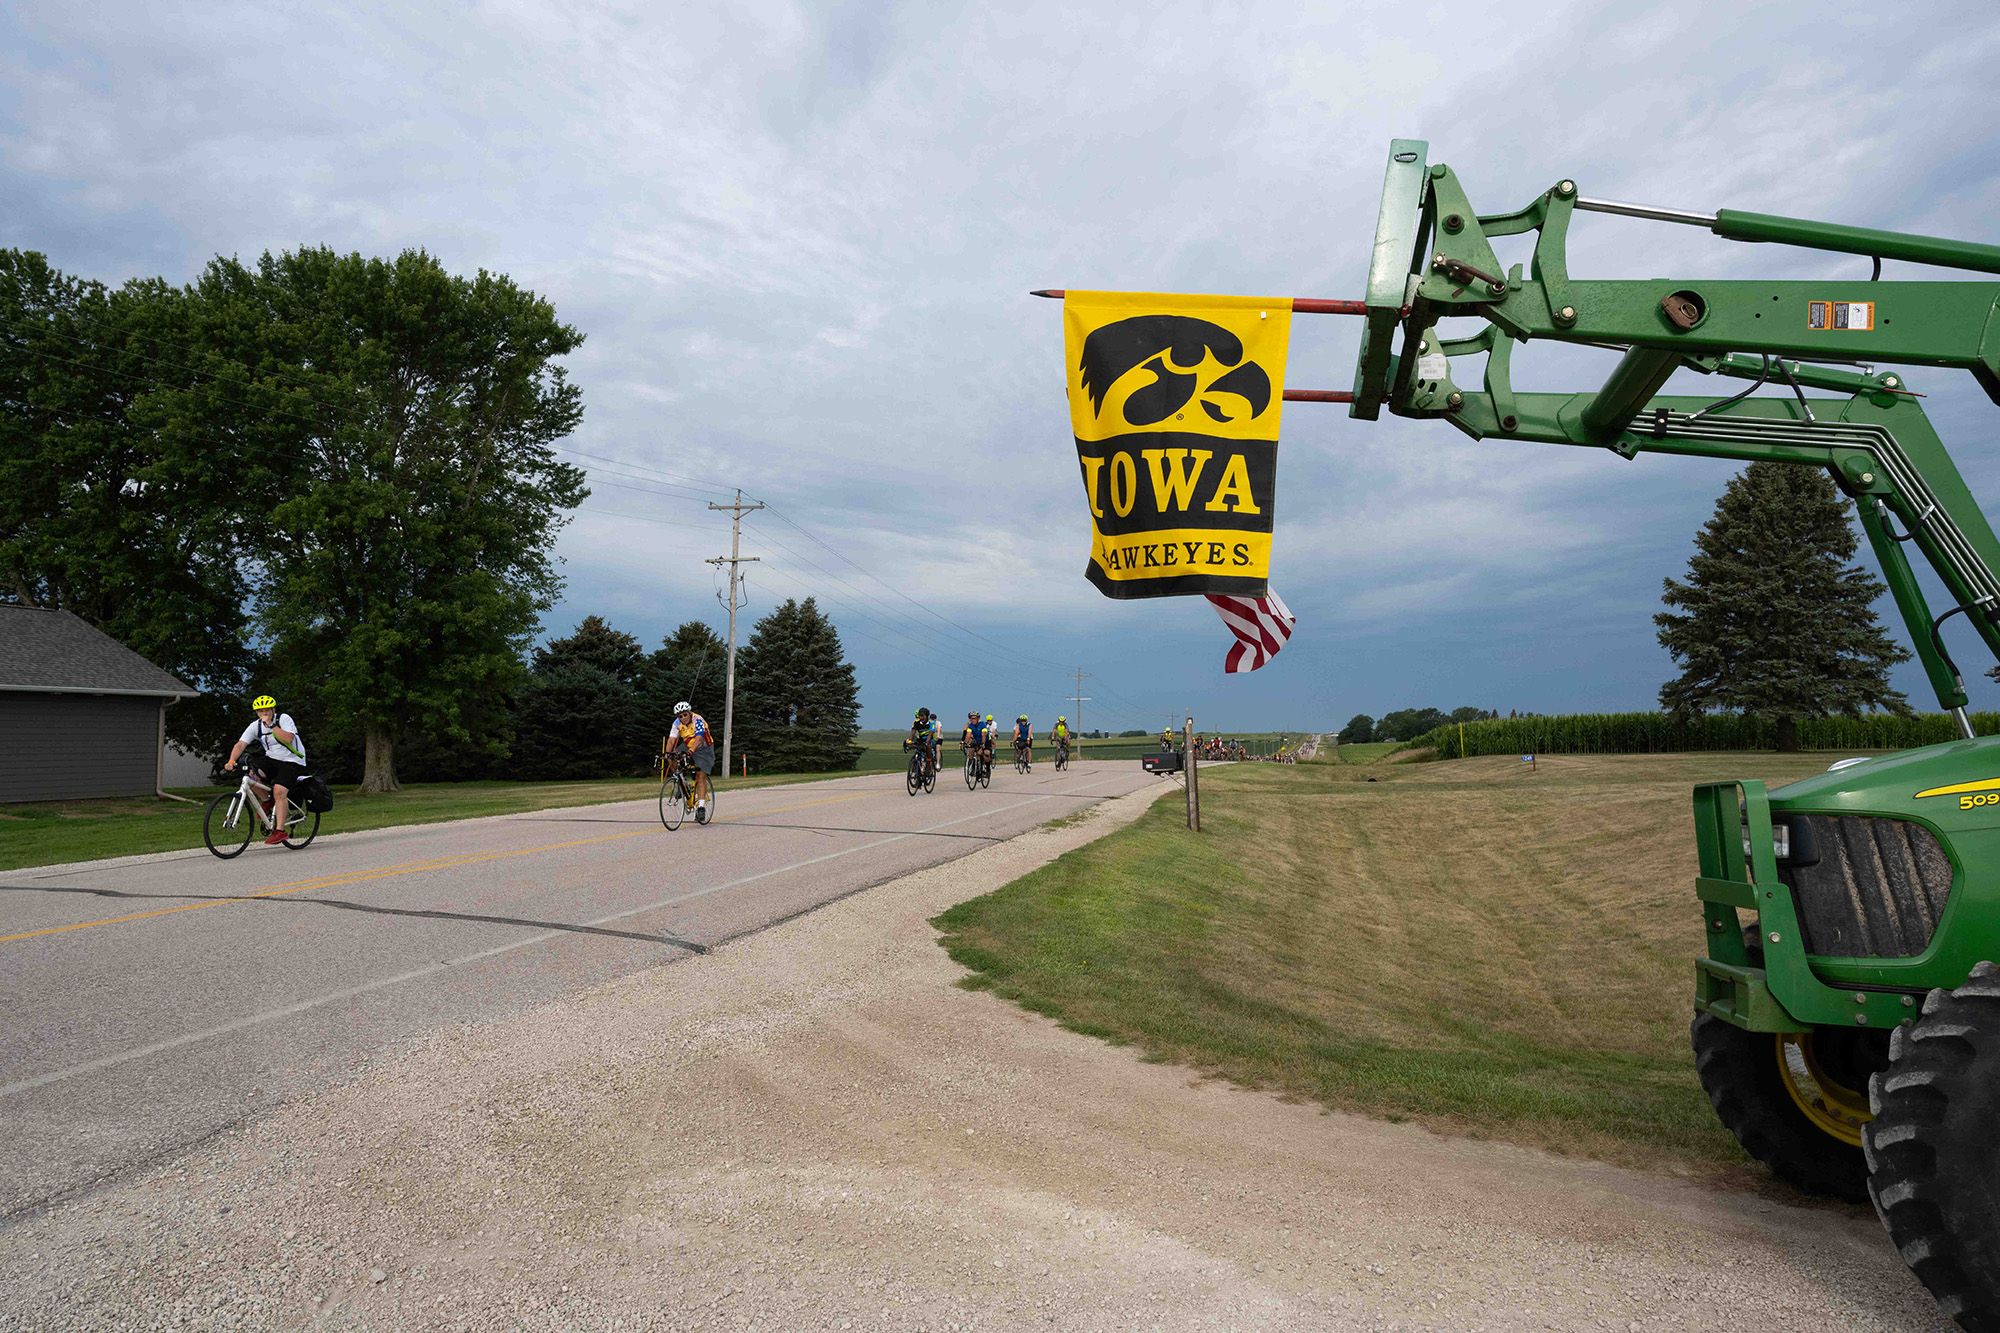 RAGBRAI riders pass by farm equipment flying an Iowa Hawkeyes flag